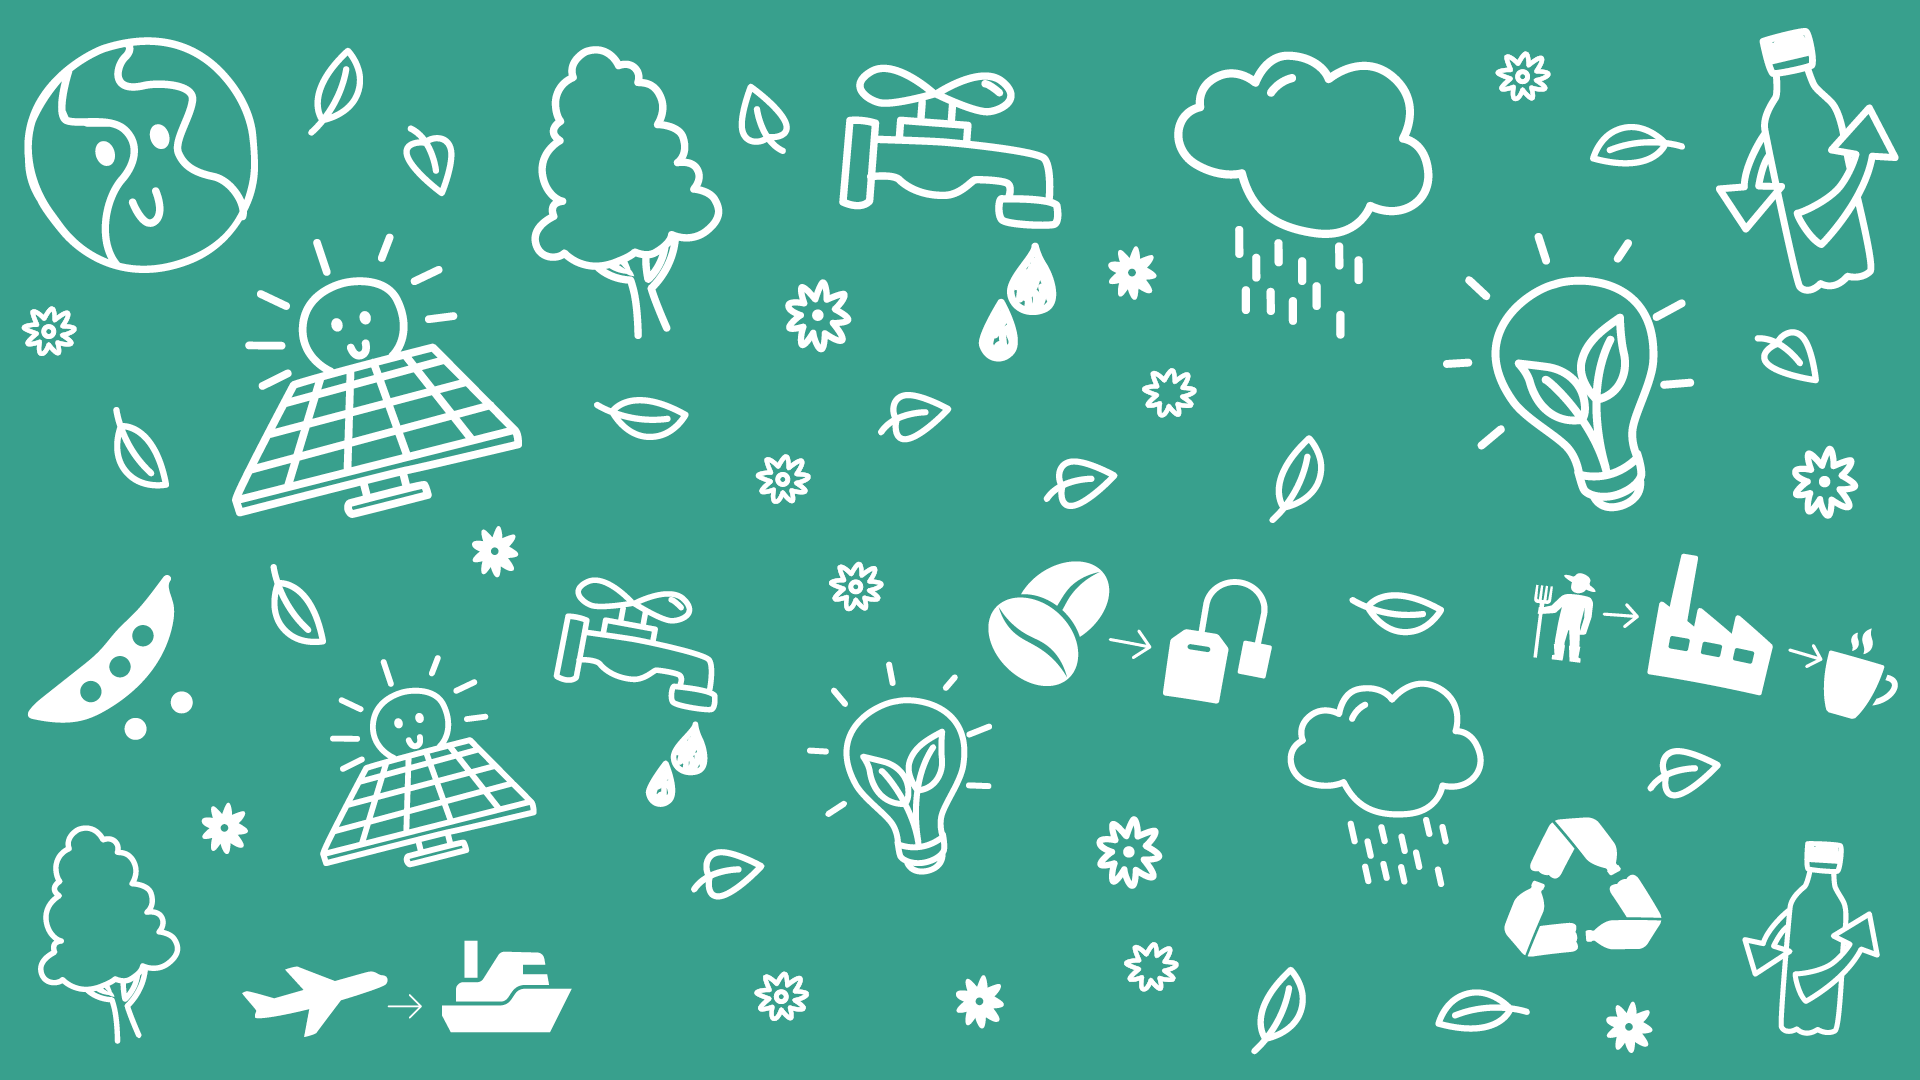 Various environmental symbols on green background